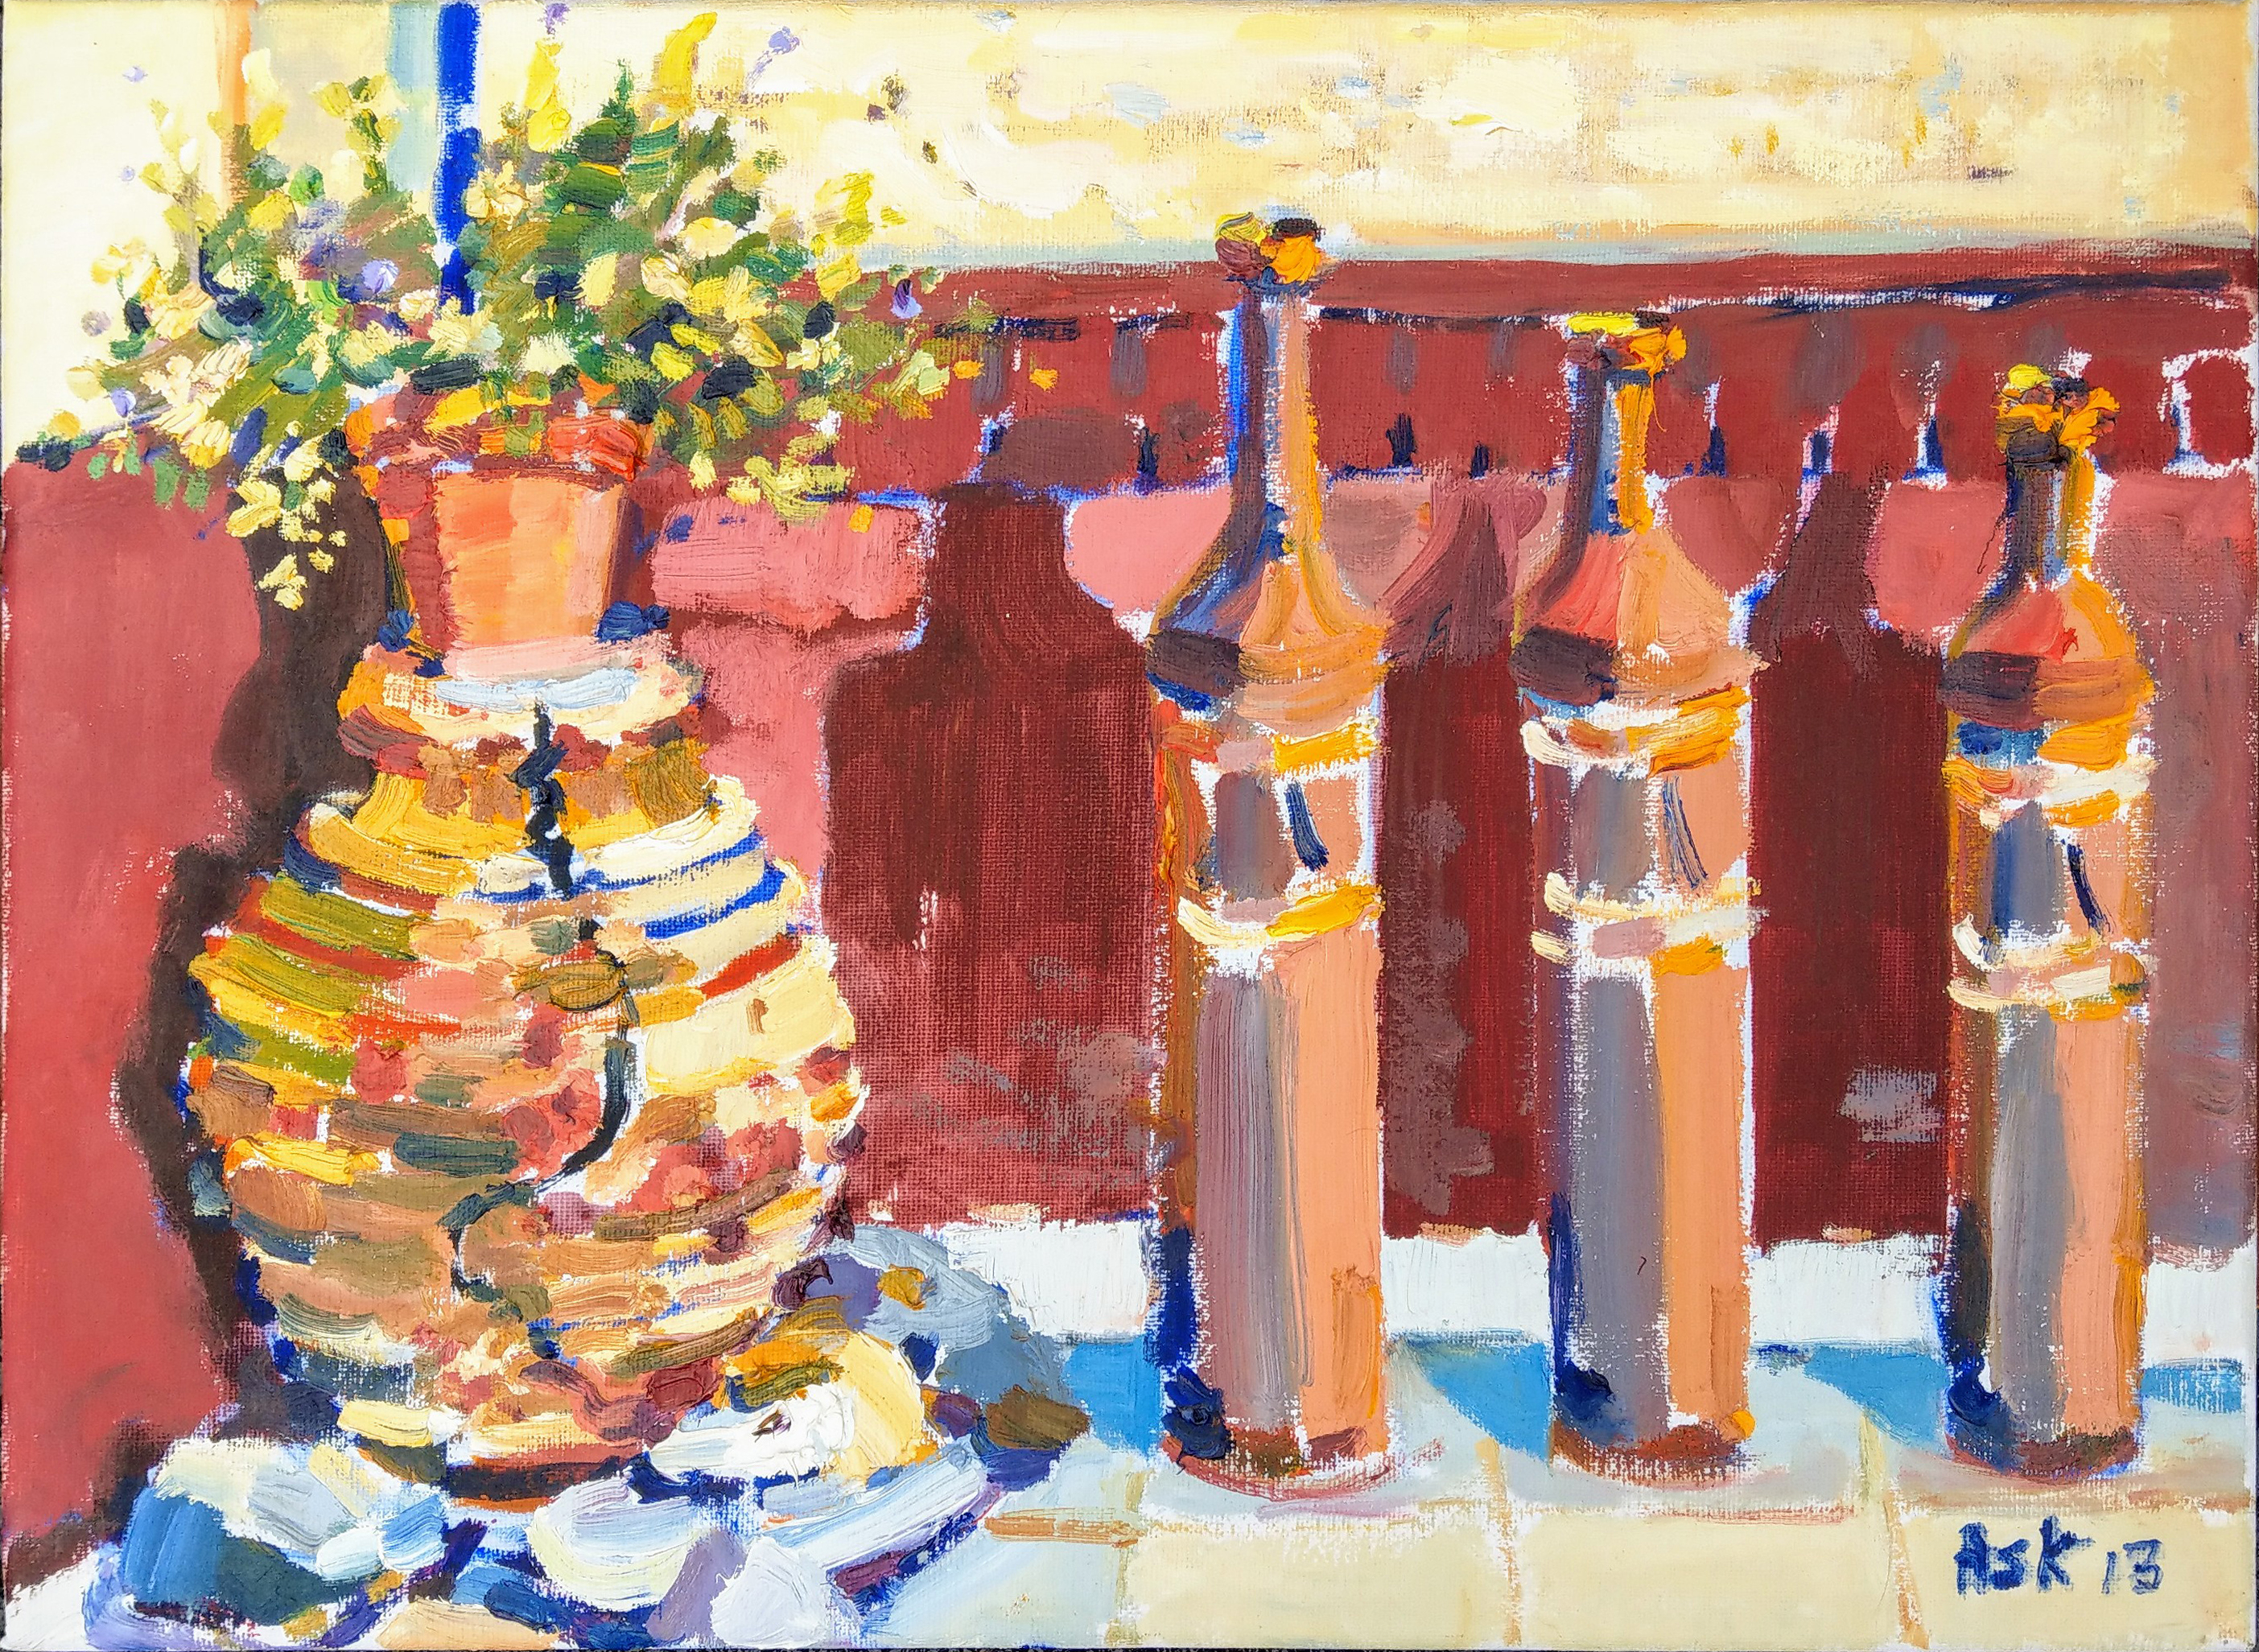 Greek Pottery on Elli's  Balcony
Πήλινα στο Μπαλκόνι της Έλλης 
Oil on Canvass 400 x 300 mm
by Elaine Ask 2013